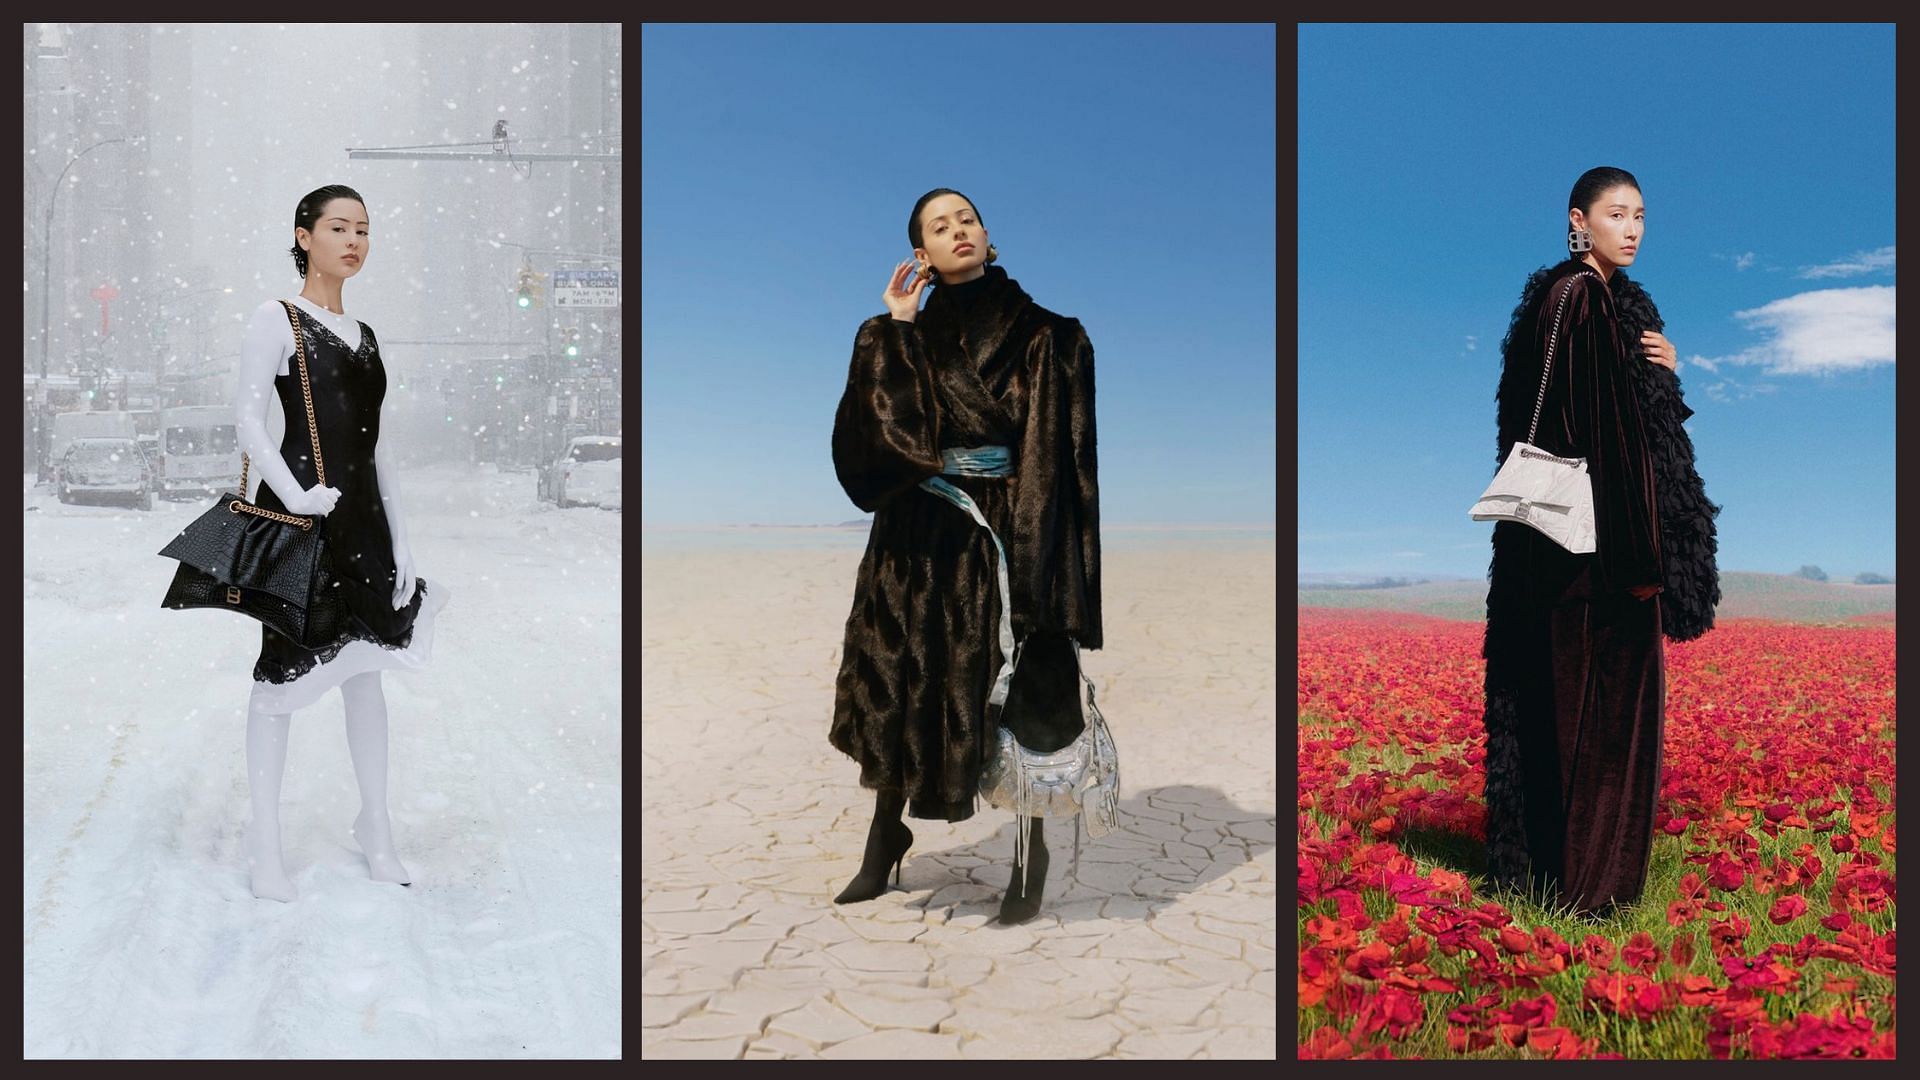 Other looks from the latest Balenciaga Winter 2022 campaign (Image via Balenciaga)